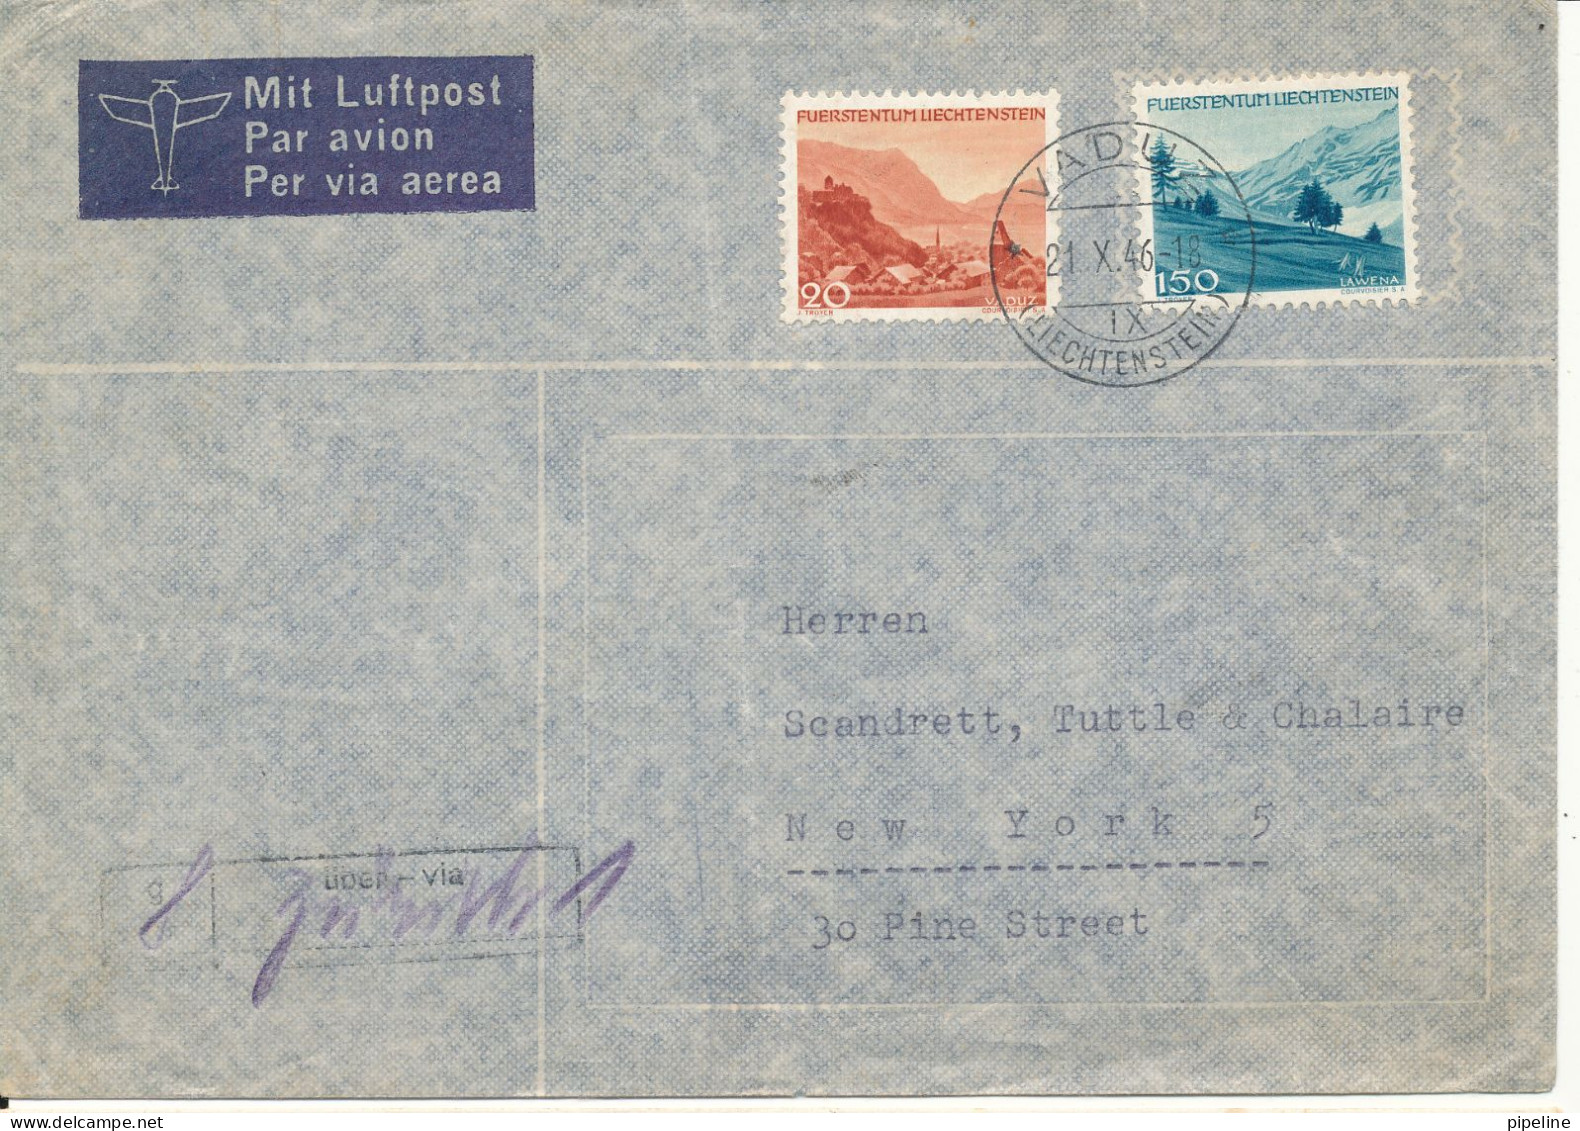 Liechtenstein Air Mail Cover Sent To USA 21-10-1946 Very Good Franked - Air Post